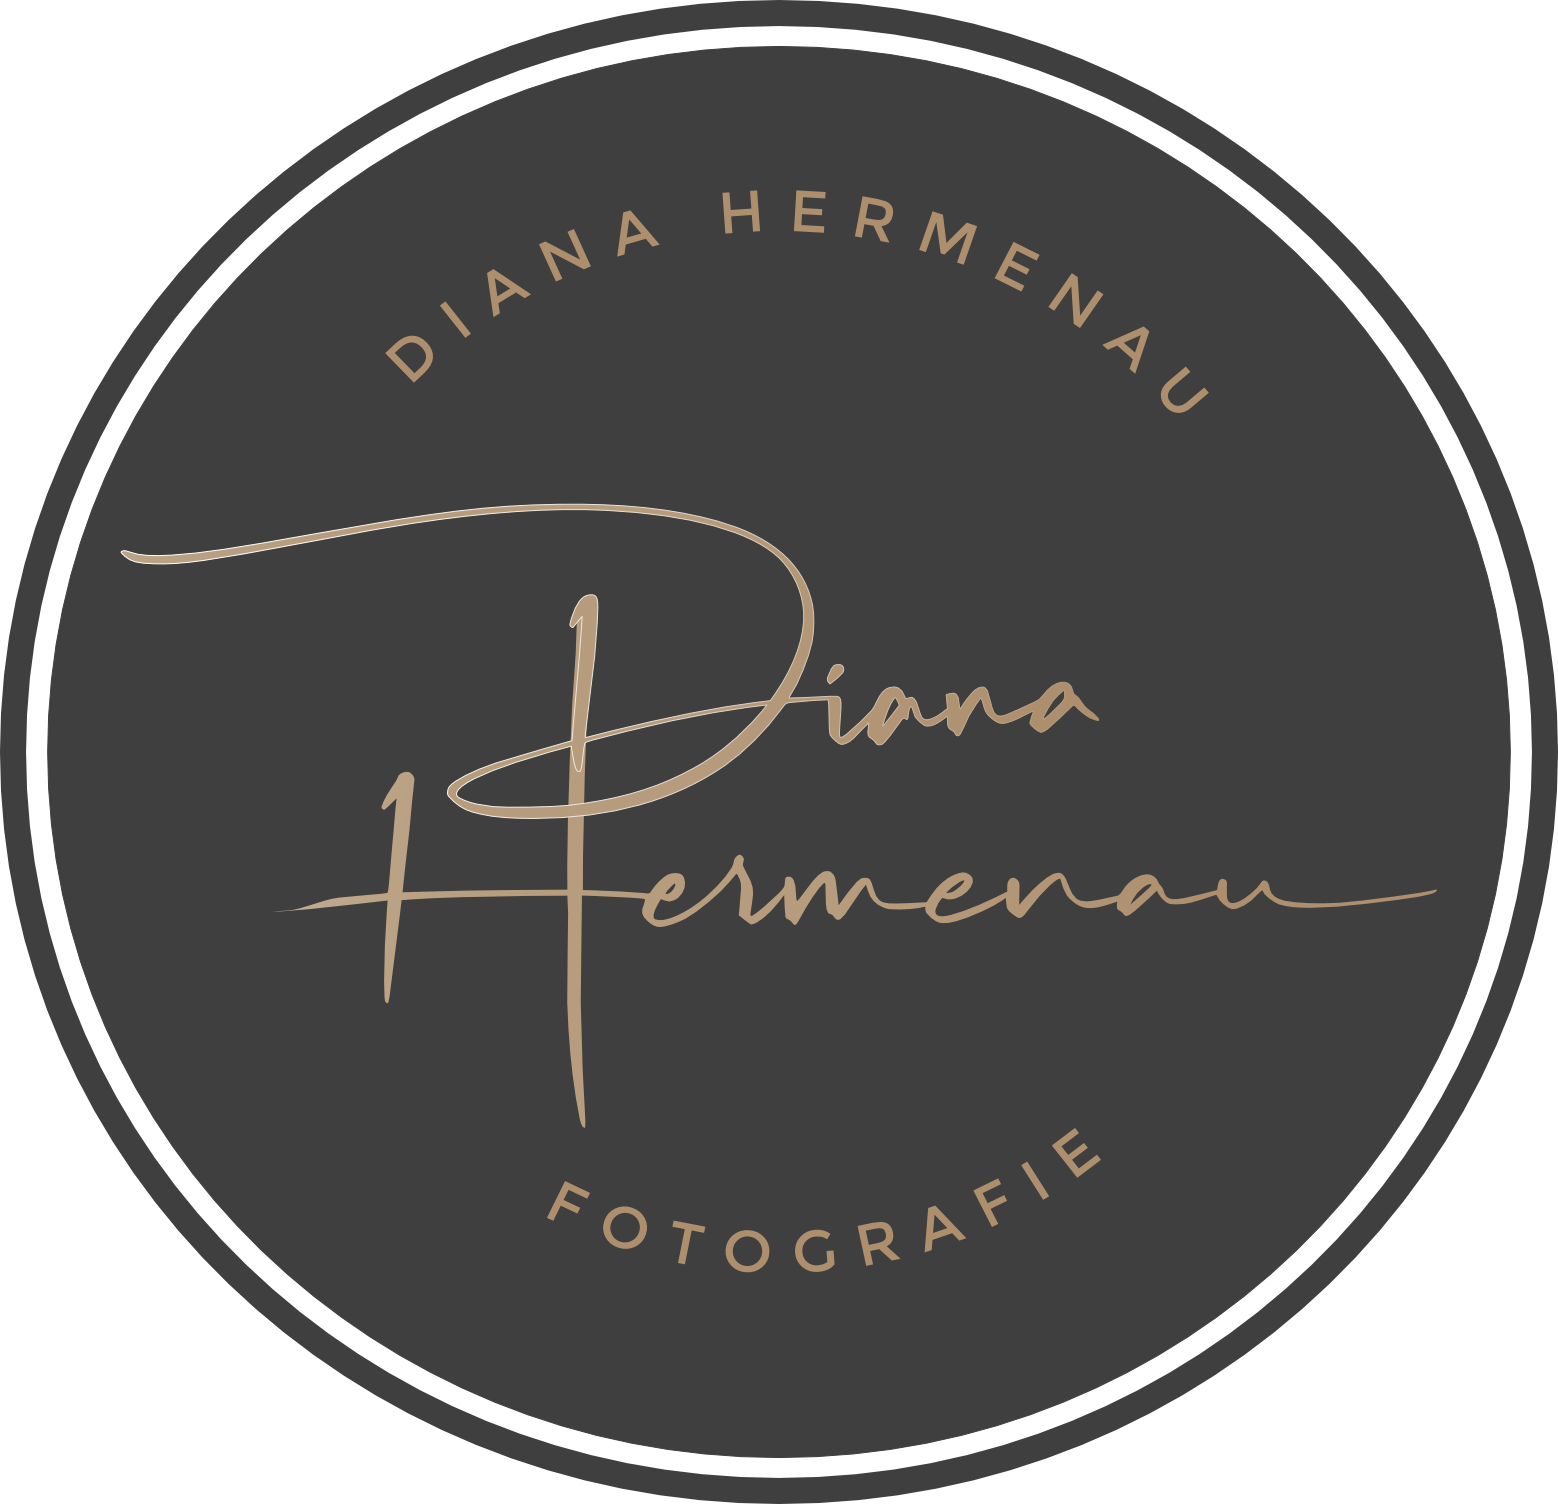 Diana Hermenau Fotografie